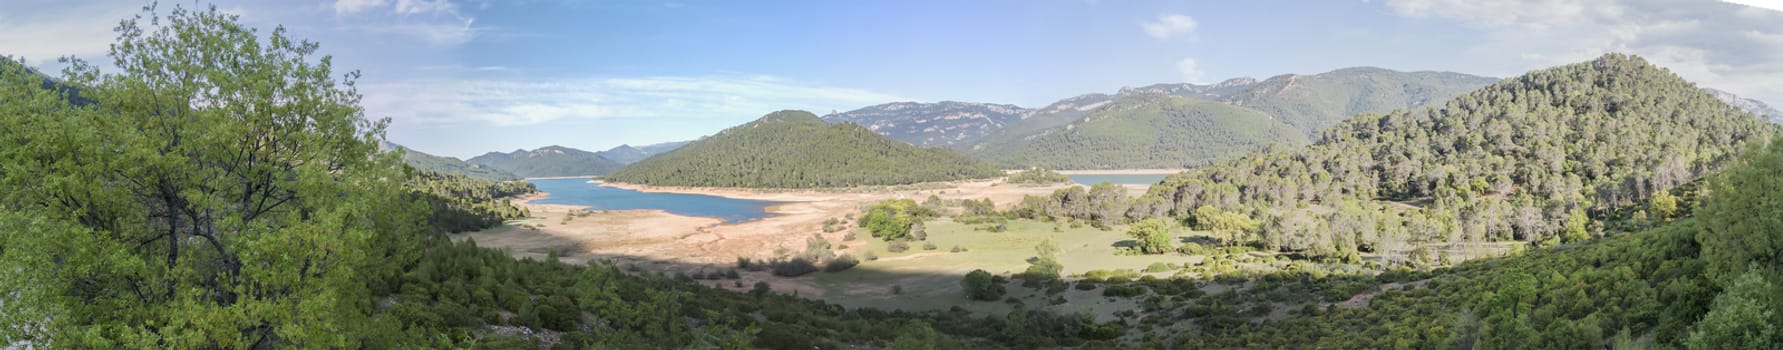 Rodriguez de la fuente lookout, Cabeza de la viña Island, Tranco reservoir, Cazorla, Jaen, Spain